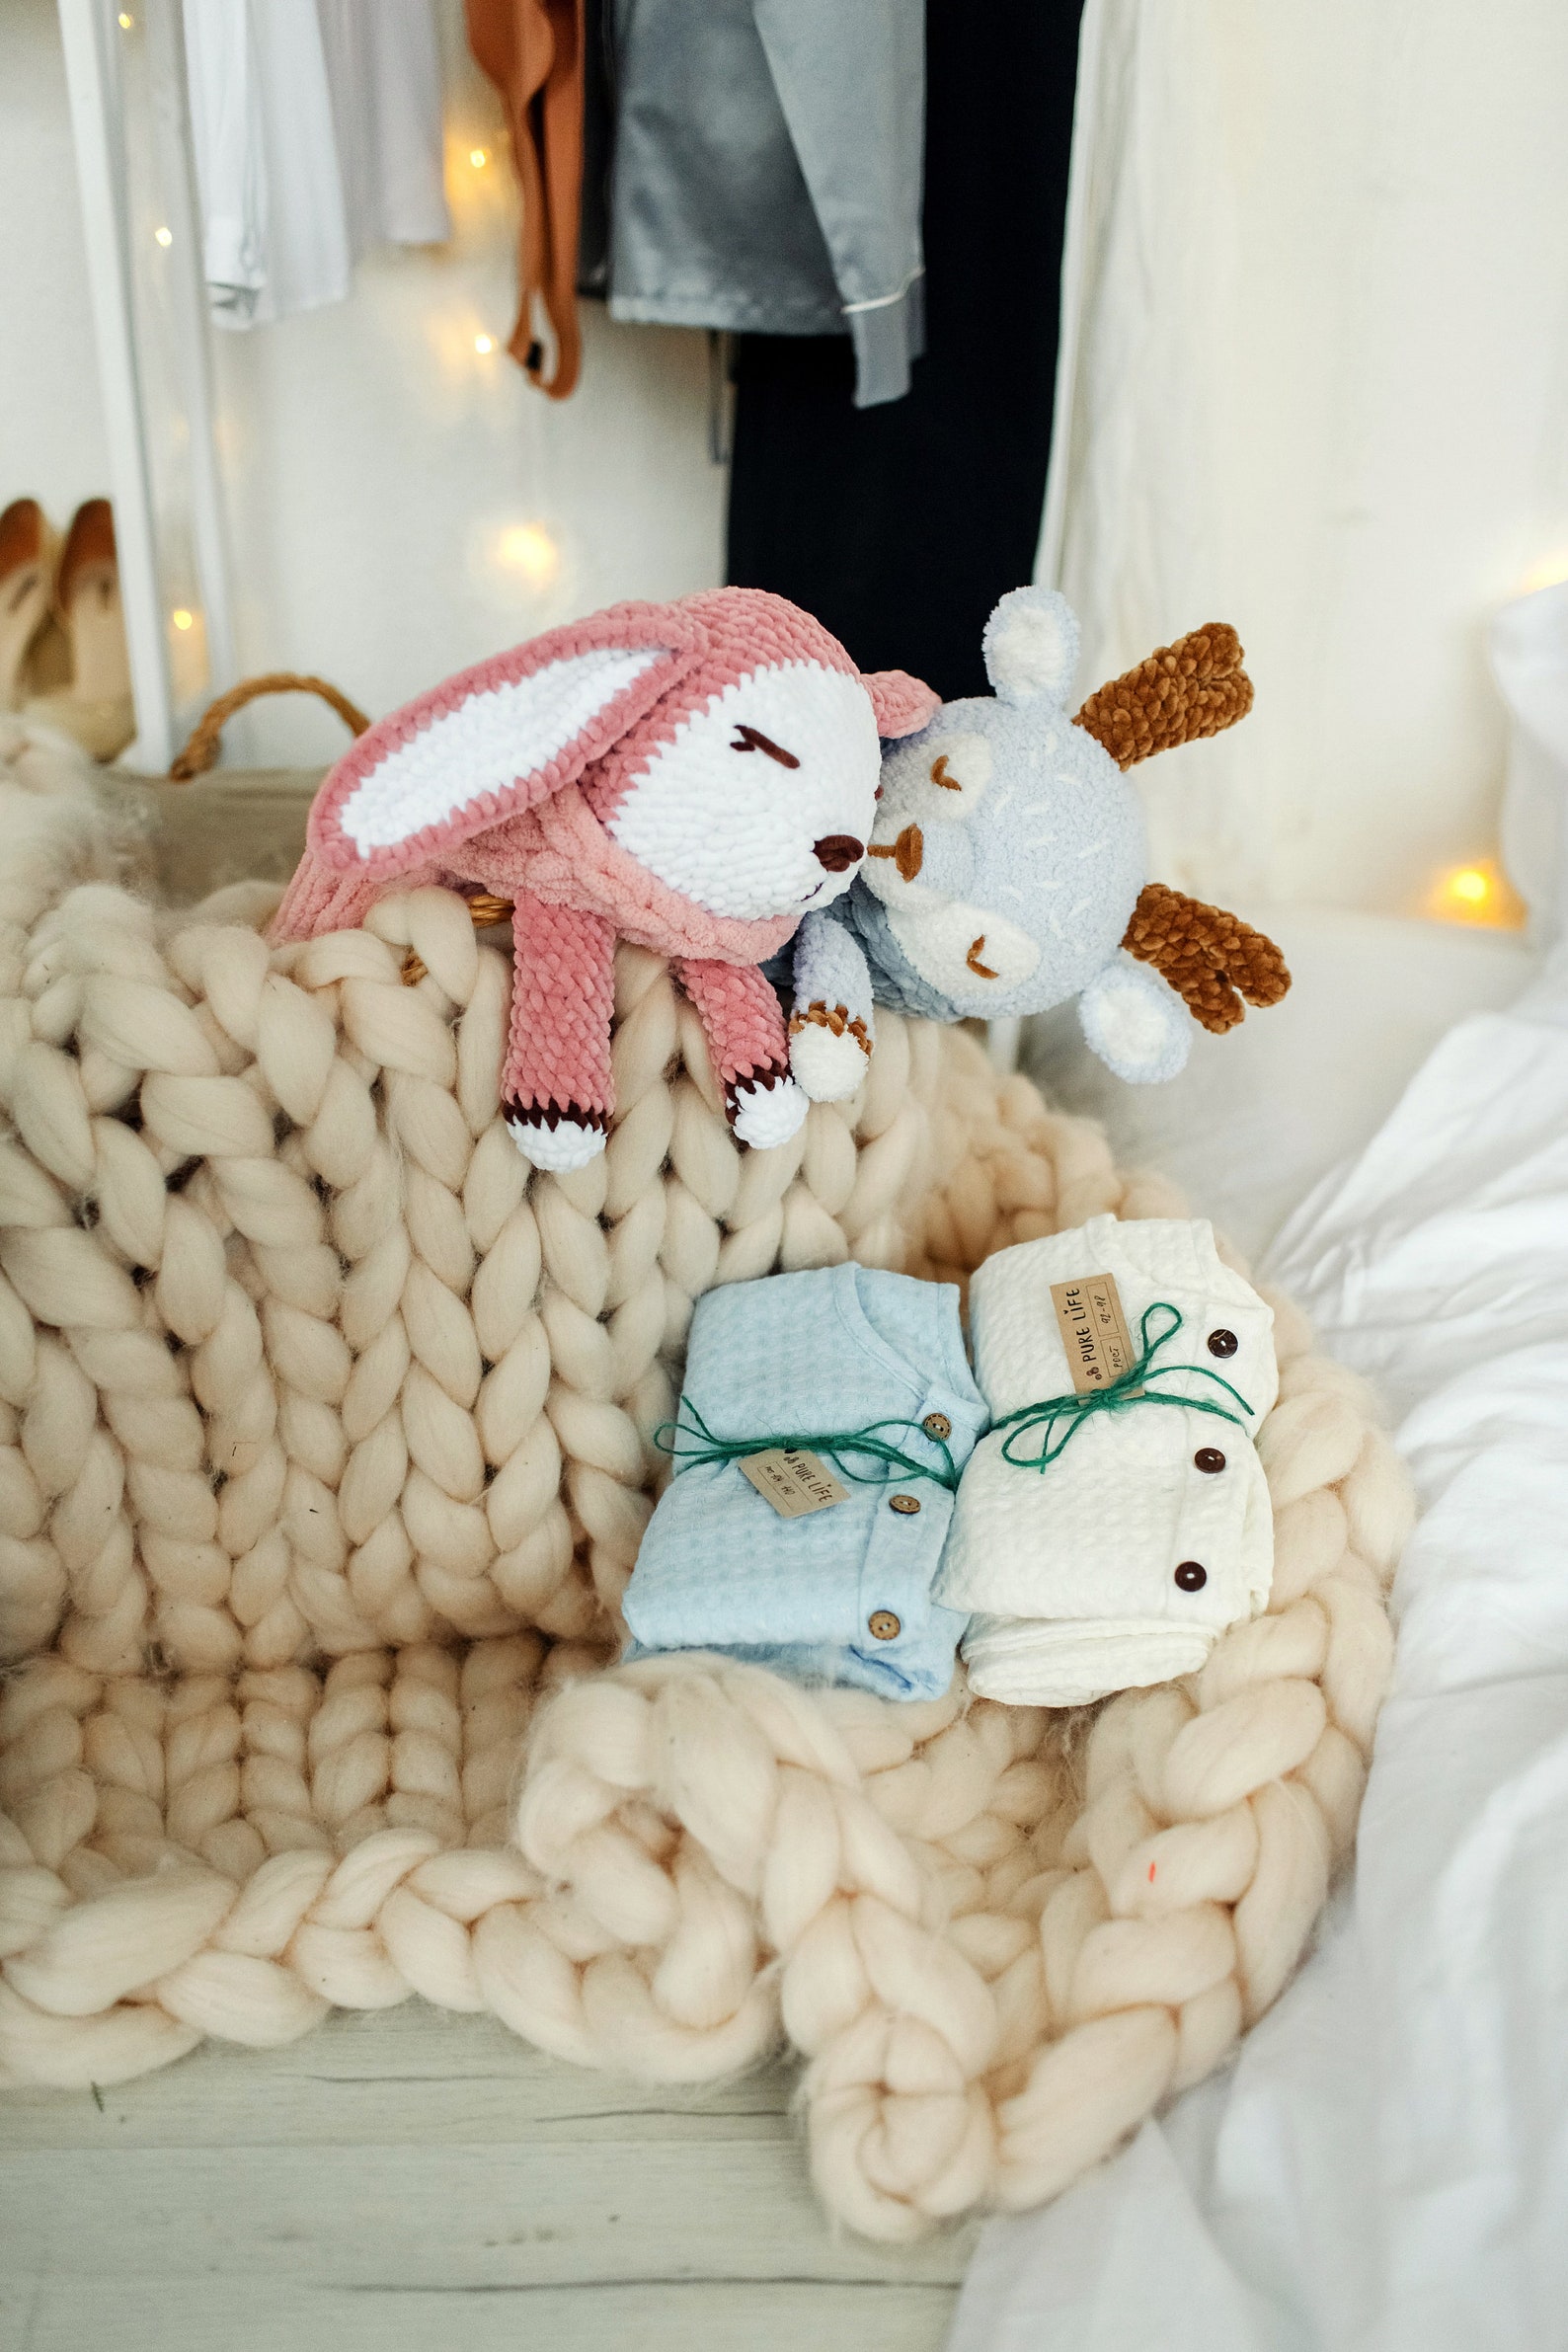 Stuffed animal pajama bag. Stuffed animal for baby. Baby | Etsy